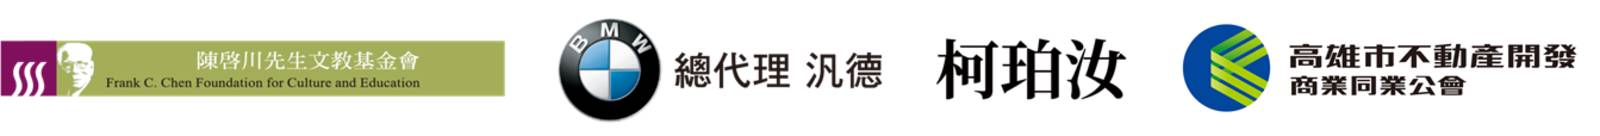 Logo:Frank C. Chen Foundation for Culture and Education、BMW、KE,PO-RU、Fubon Financial、The Real Estate Development Association of Kaohsiung